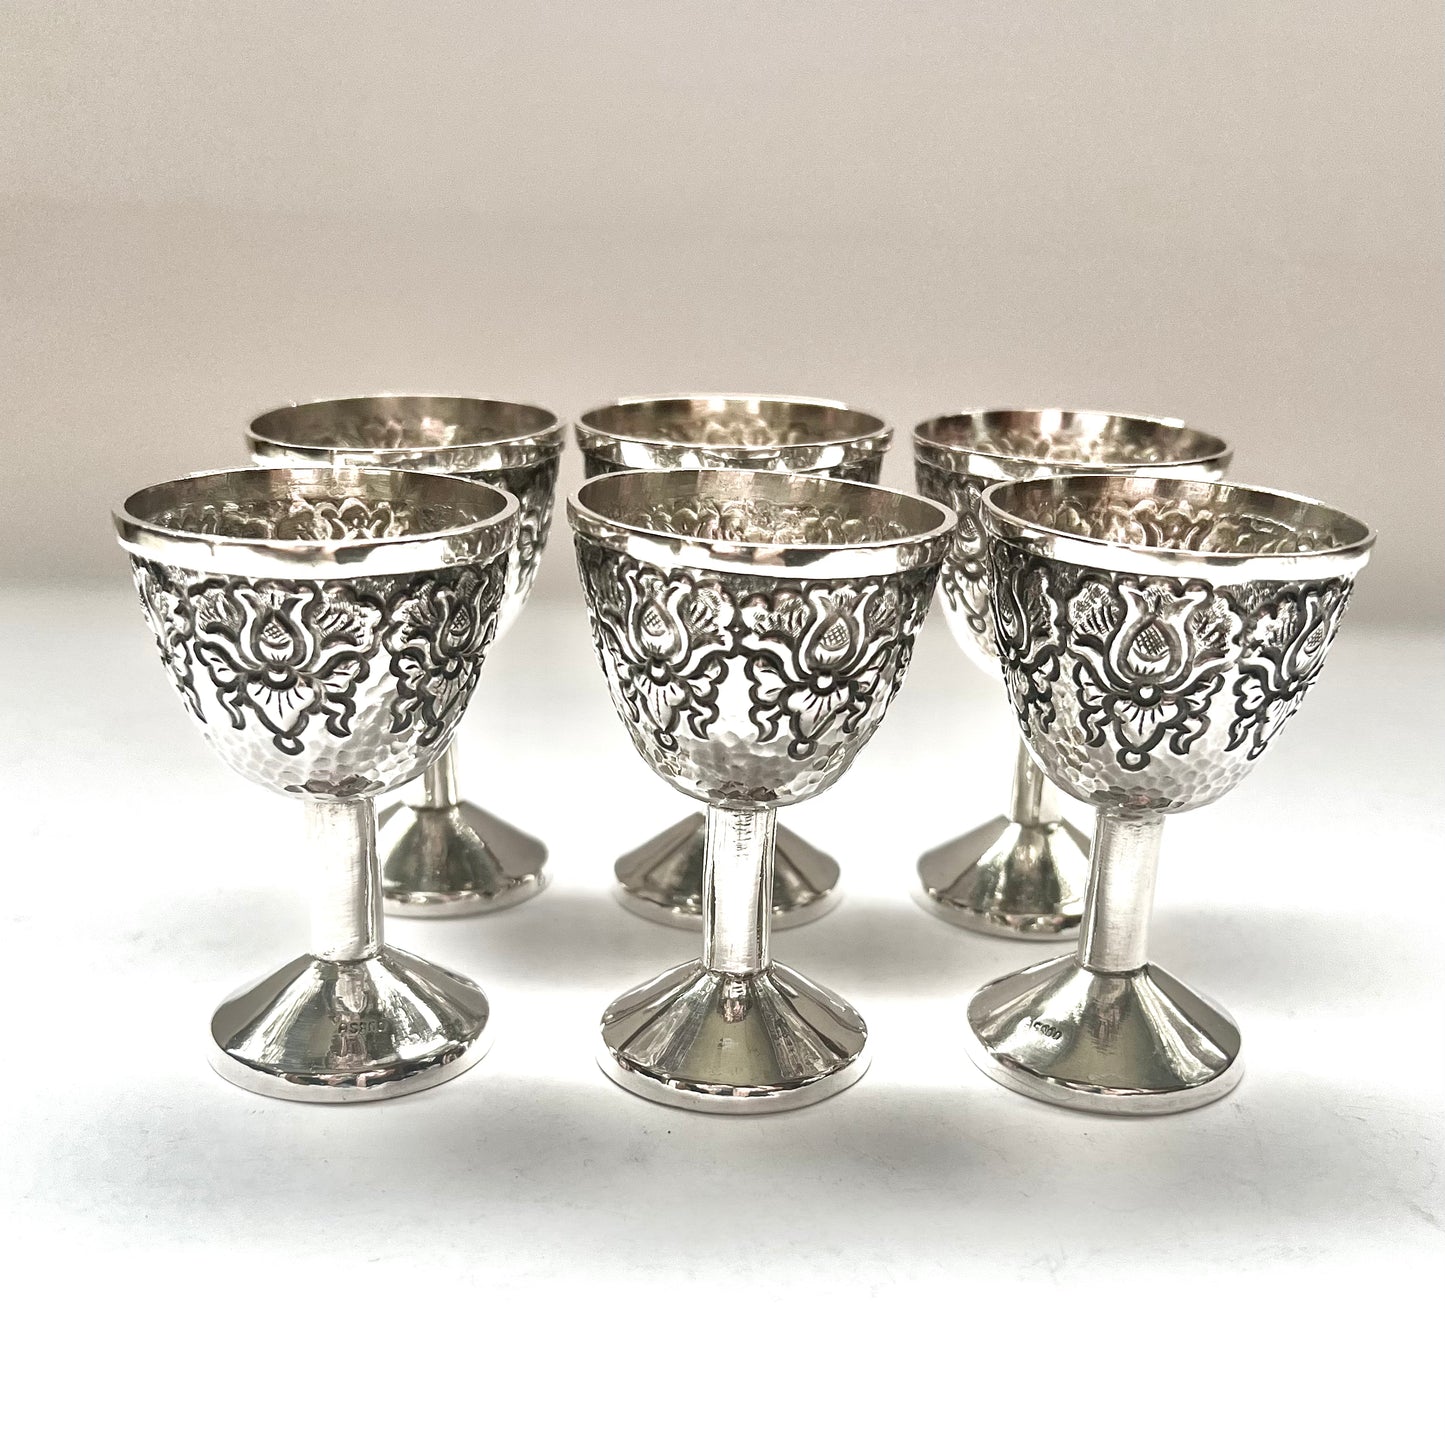 6 vintage Yogyakarta .800 silver liqueur cups, circa mid 20th century (1930s to 1950s)